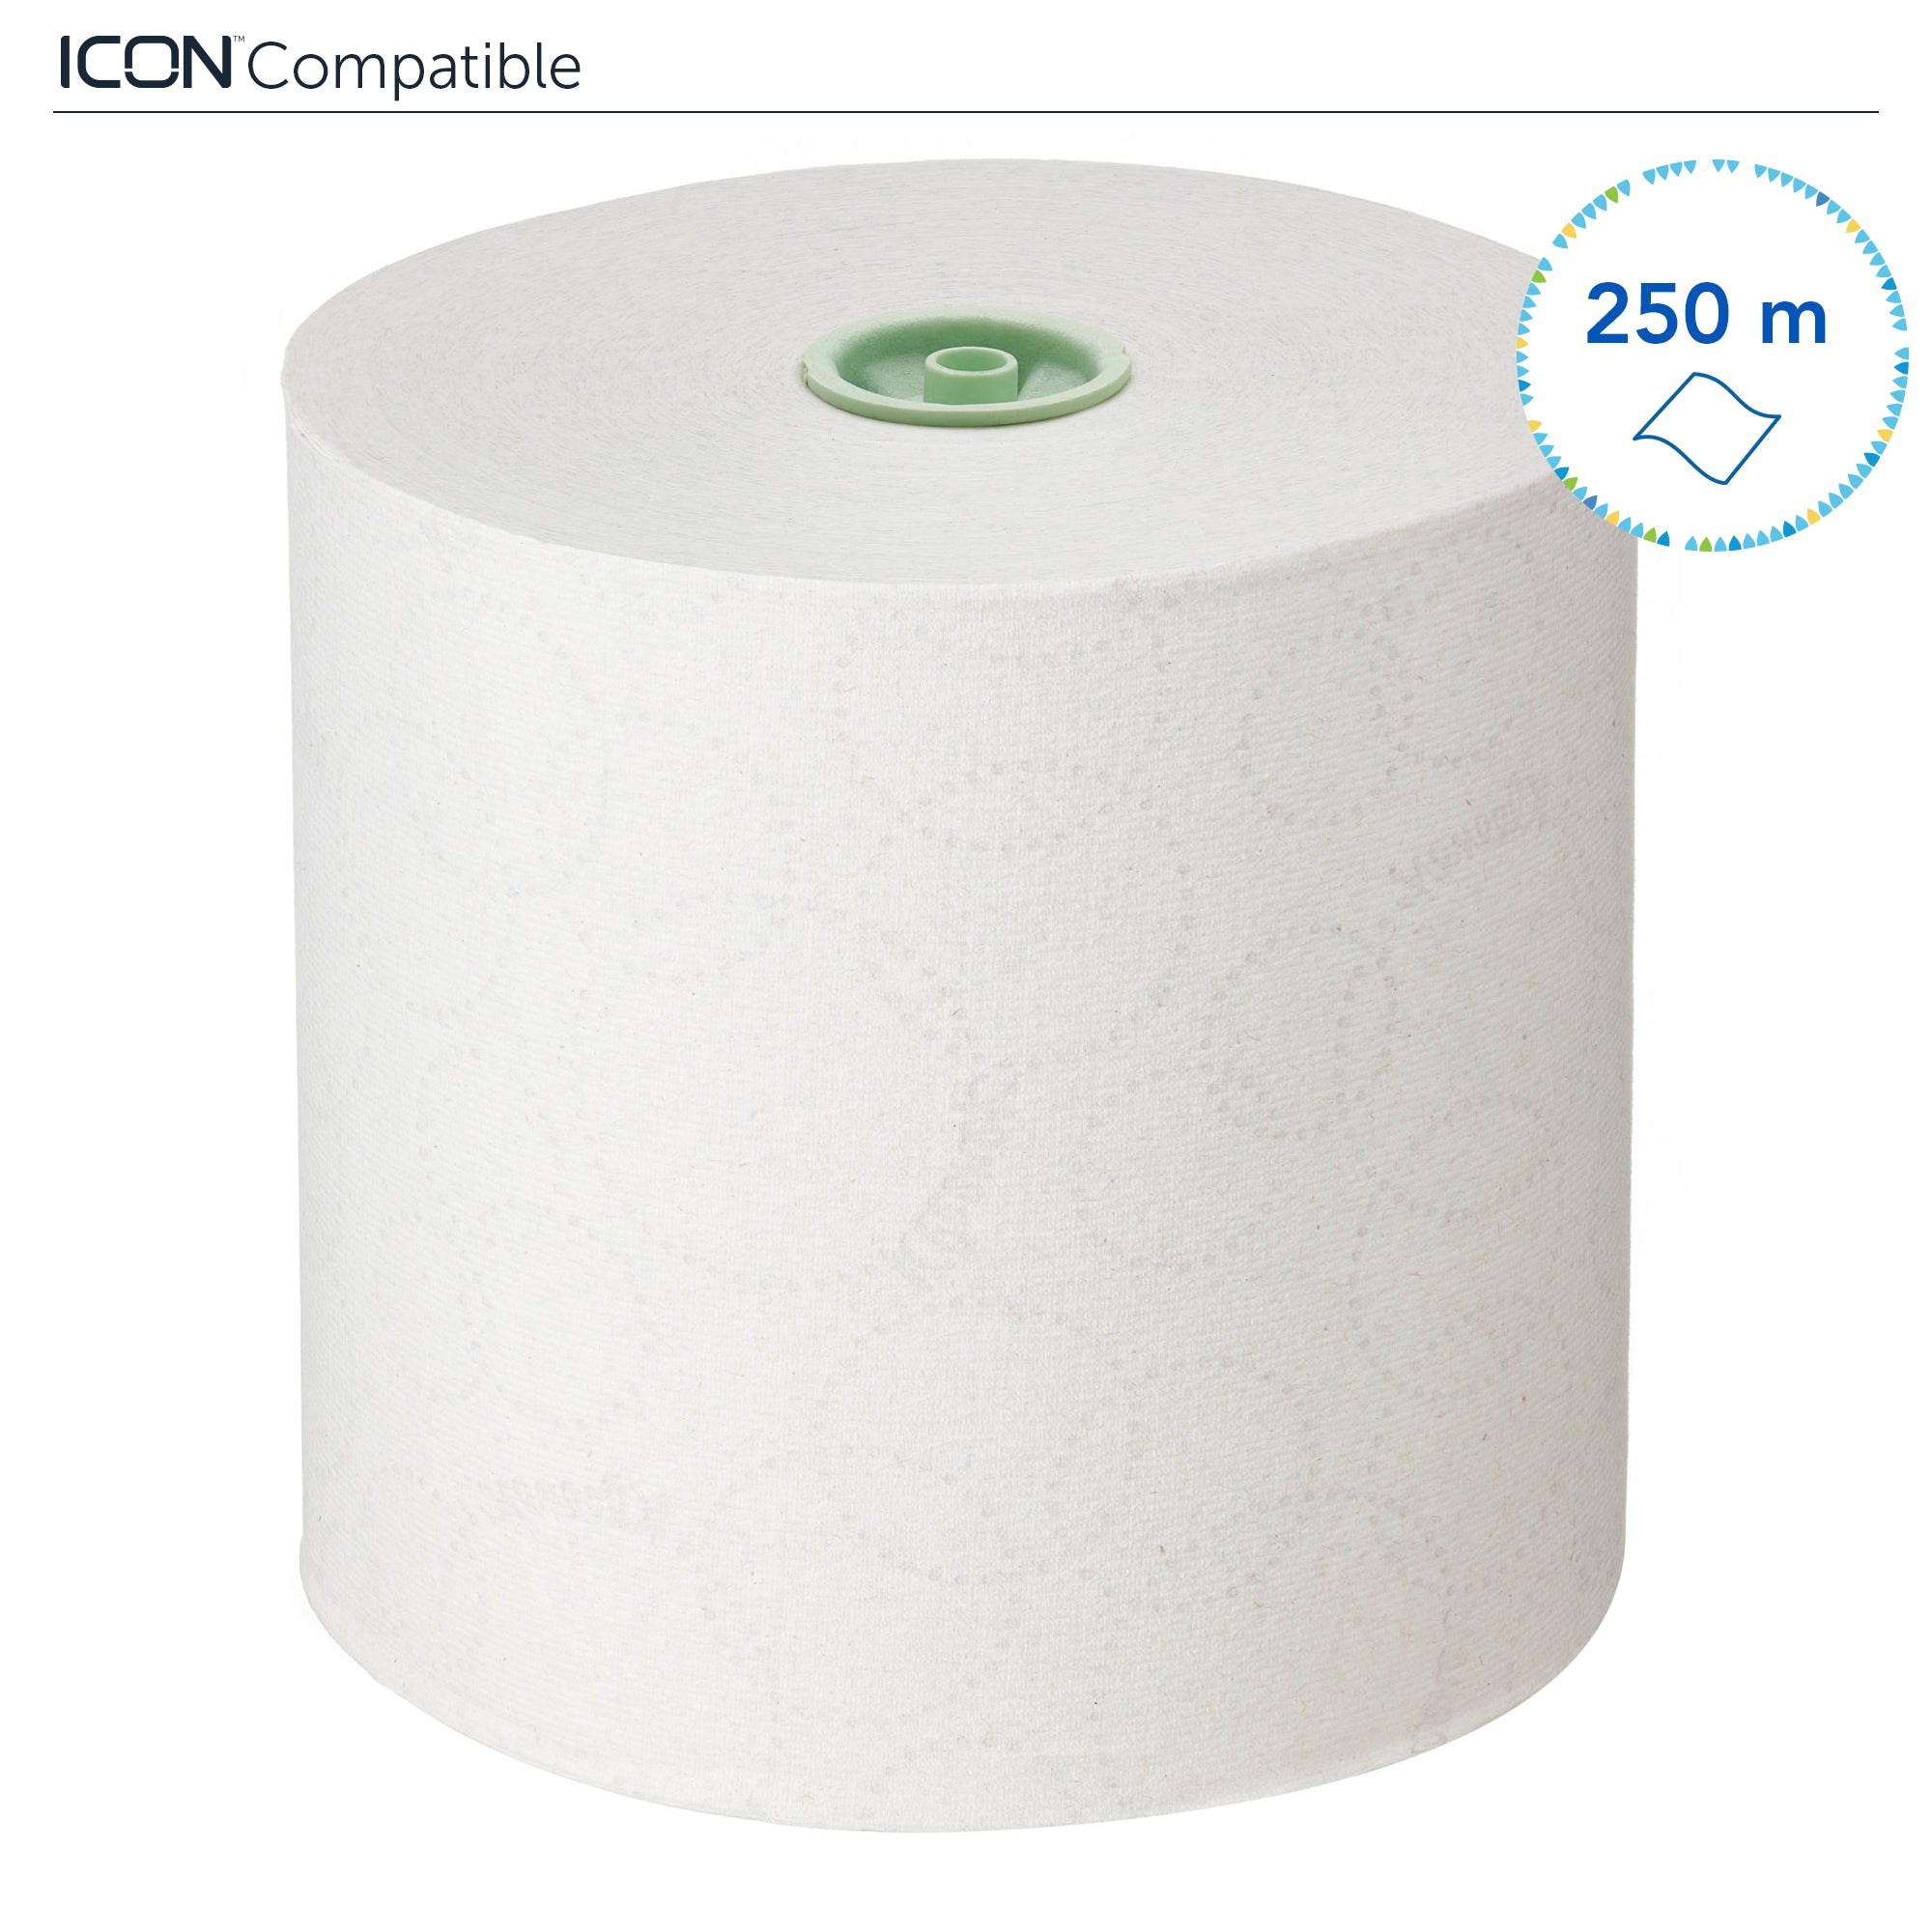 Kleenex® Papierhandtücher auf Rollen, 6646 – E-Roll-Großrolle für Handtücher – 6 x 250 m weiße Papierhandtuchrollen (insg. 1.500 m)